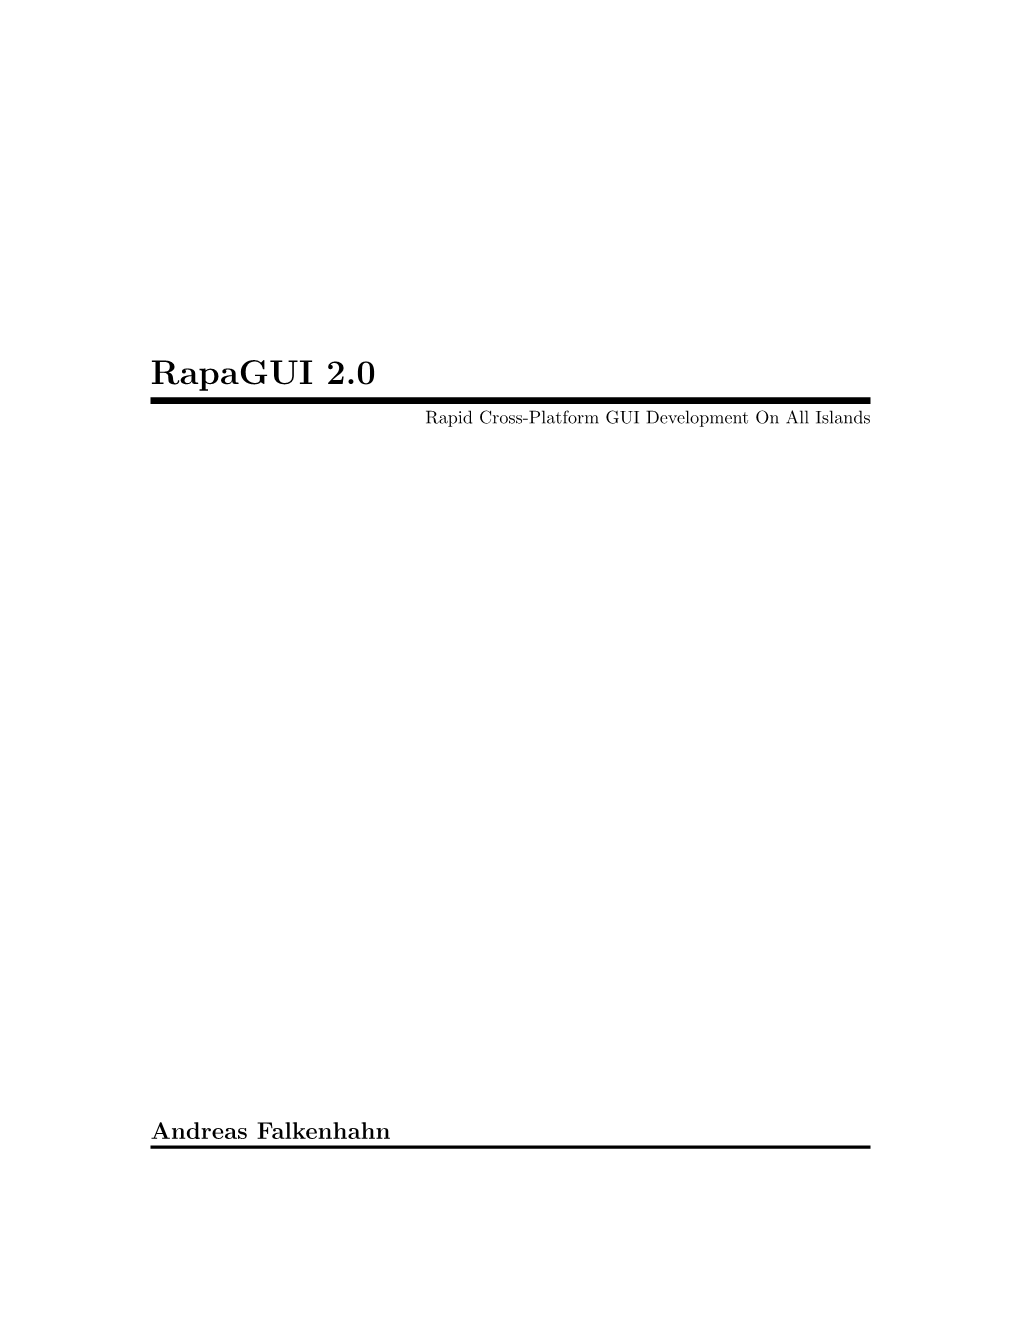 Rapagui 2.0 Rapid Cross-Platform GUI Development on All Islands